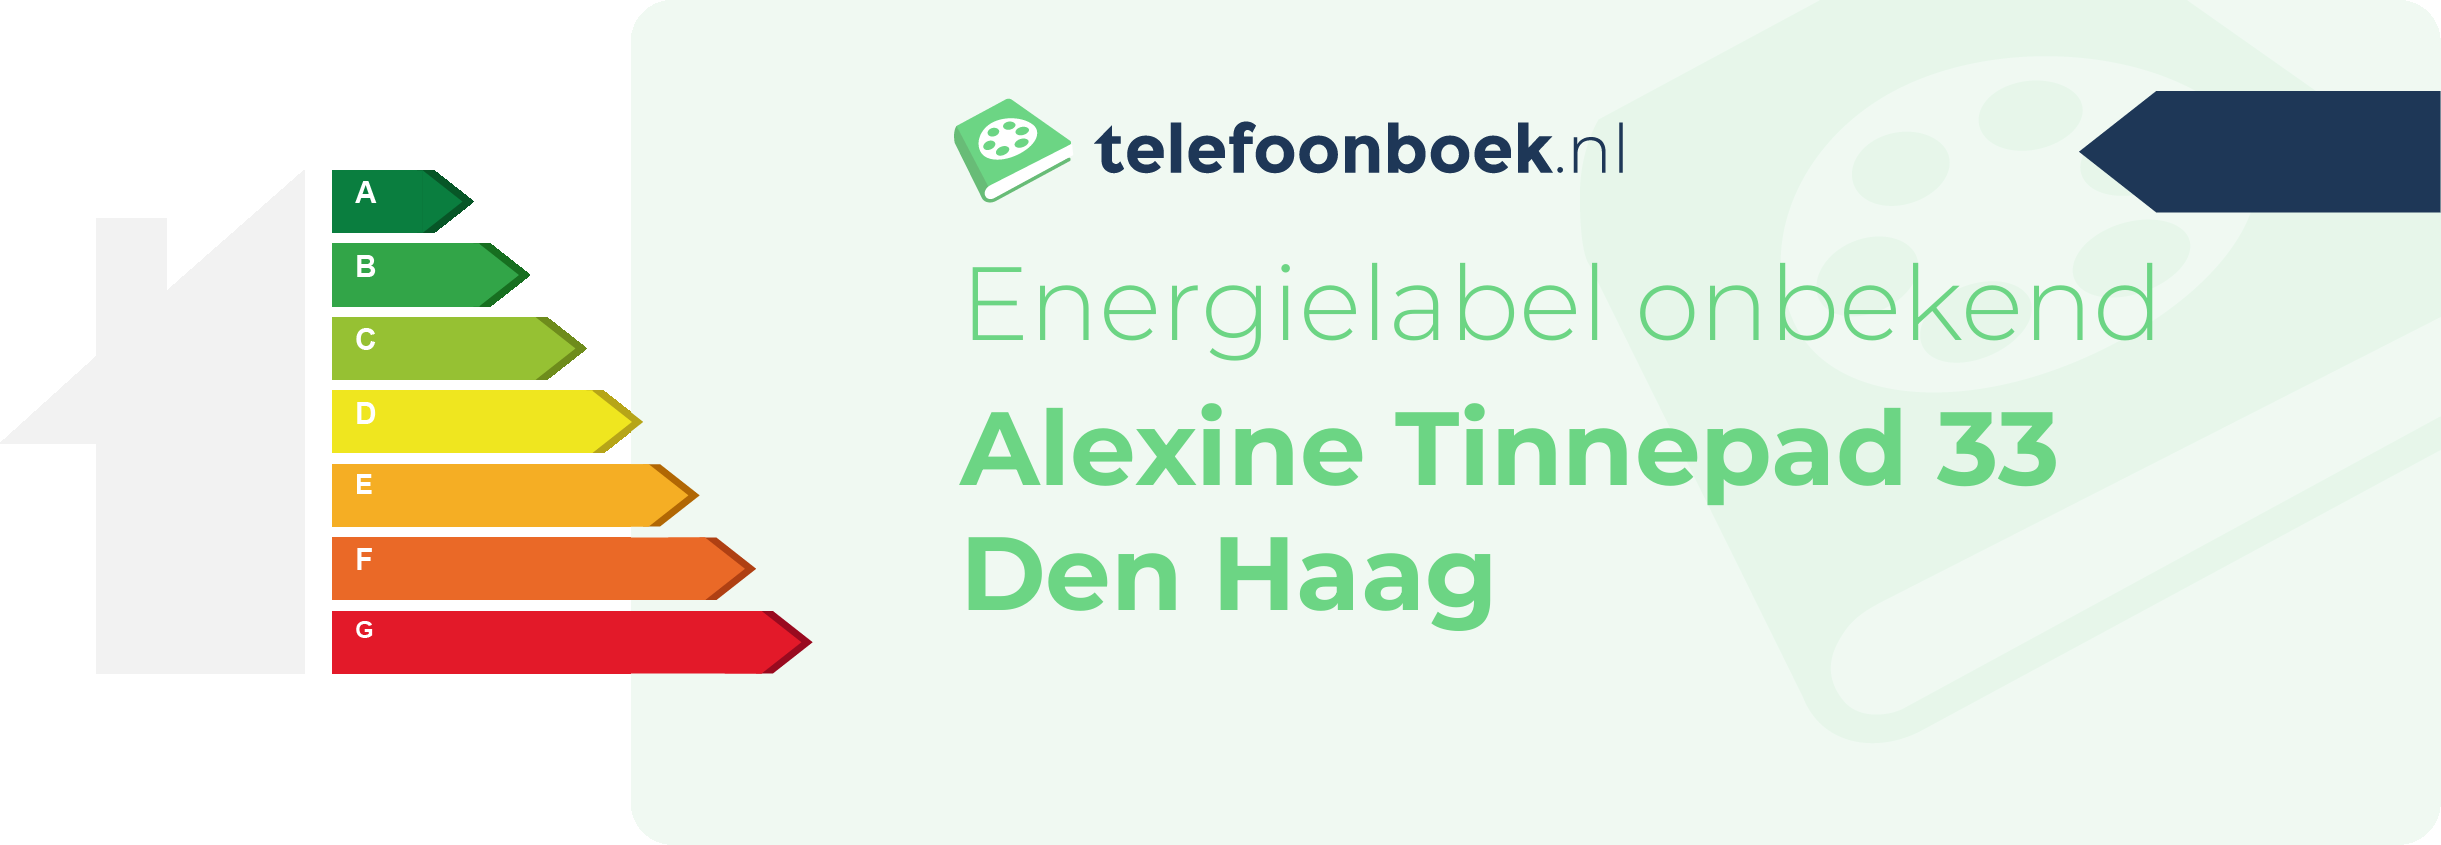 Energielabel Alexine Tinnepad 33 Den Haag